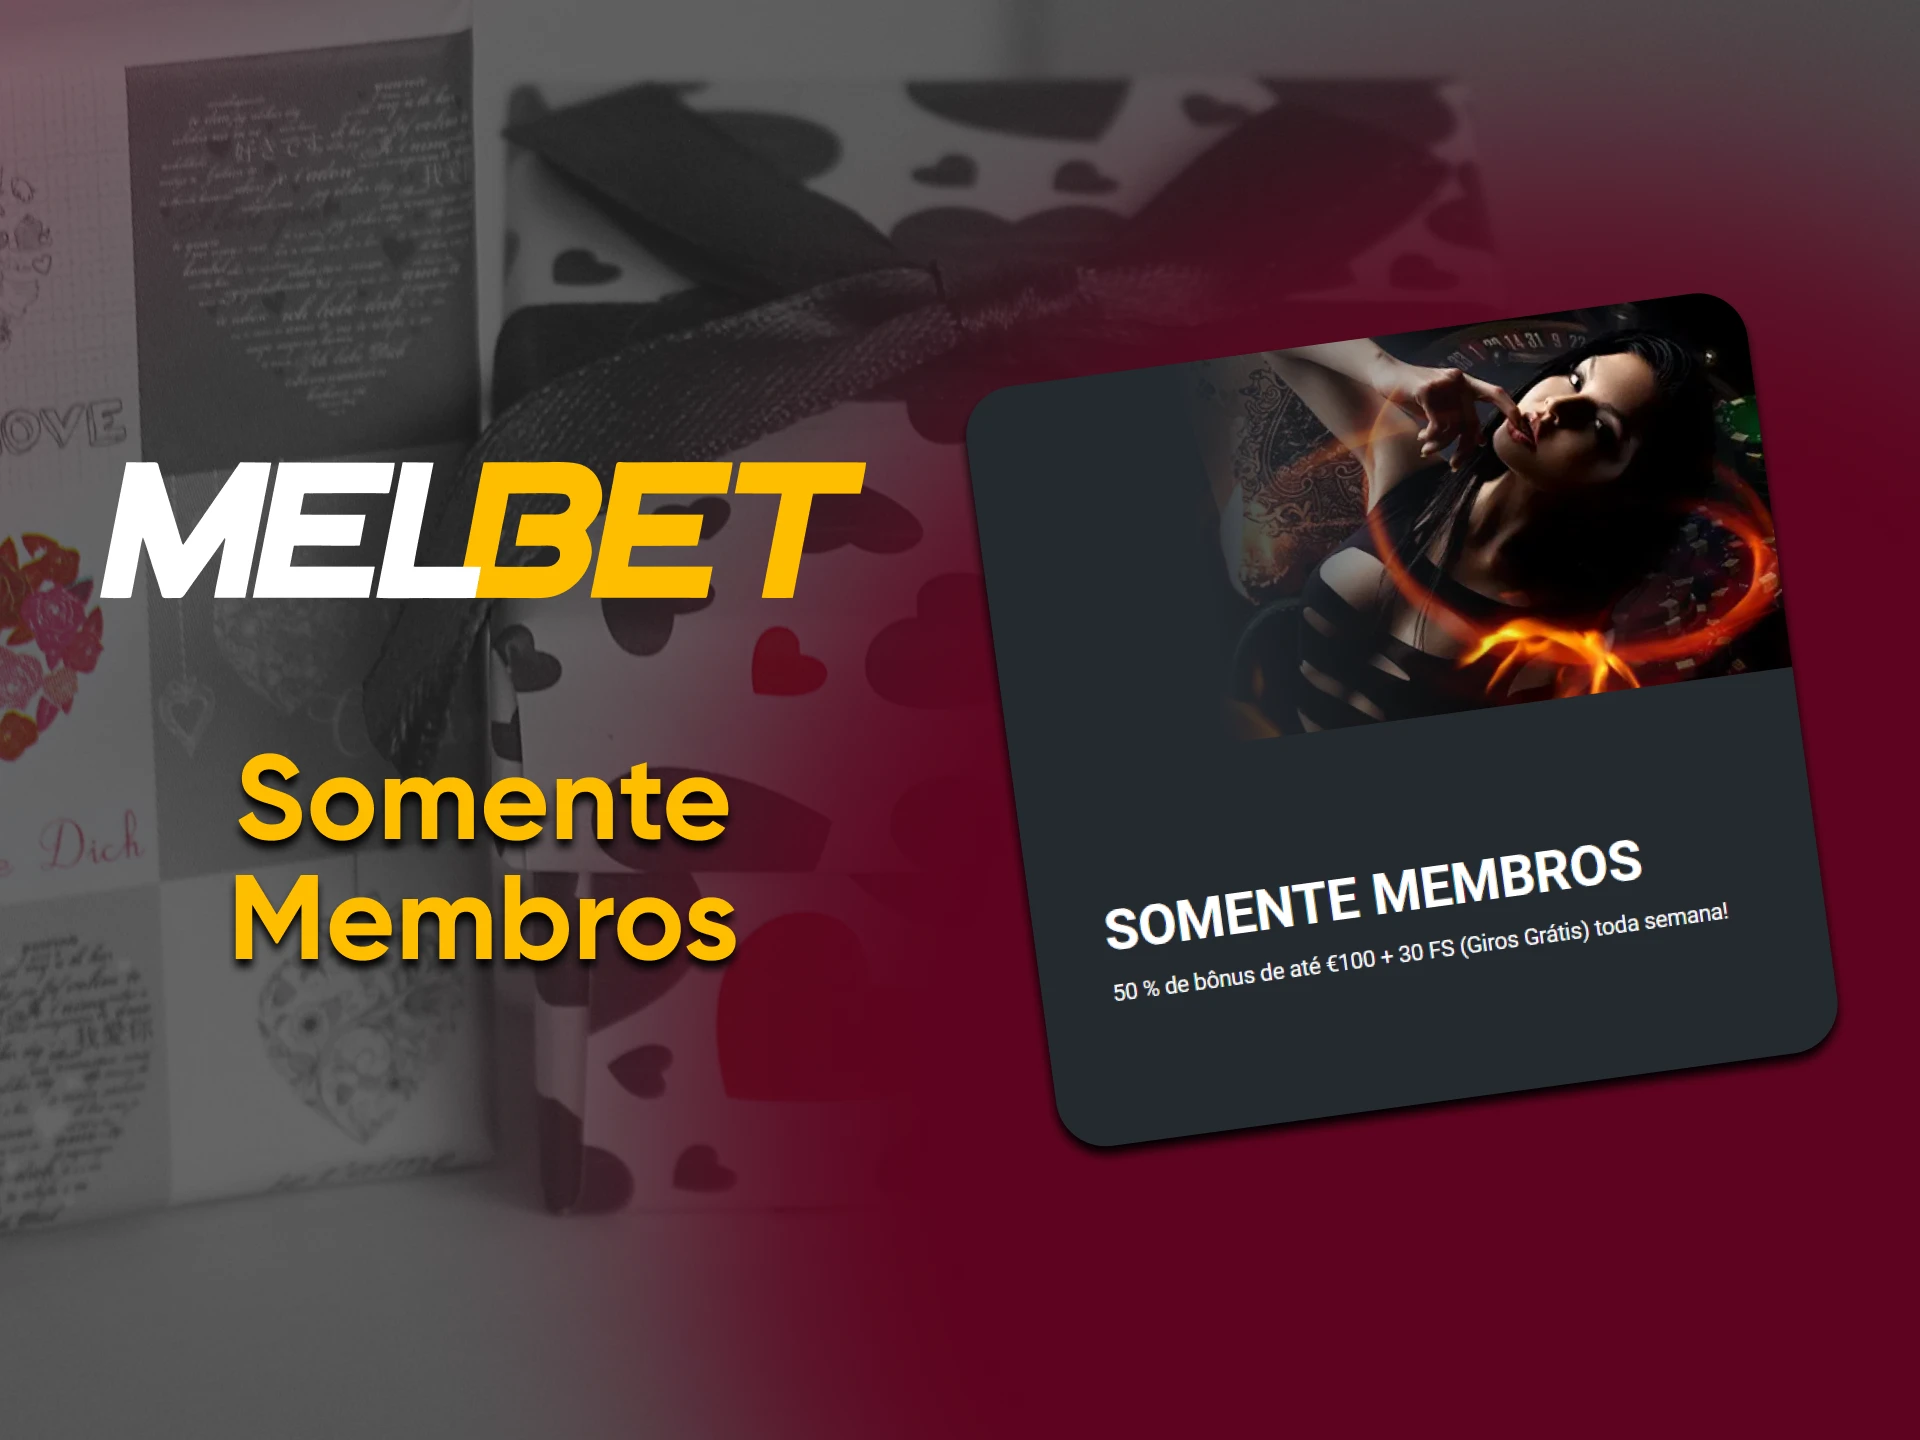 The Melbet website has a separate bonus for casino games.